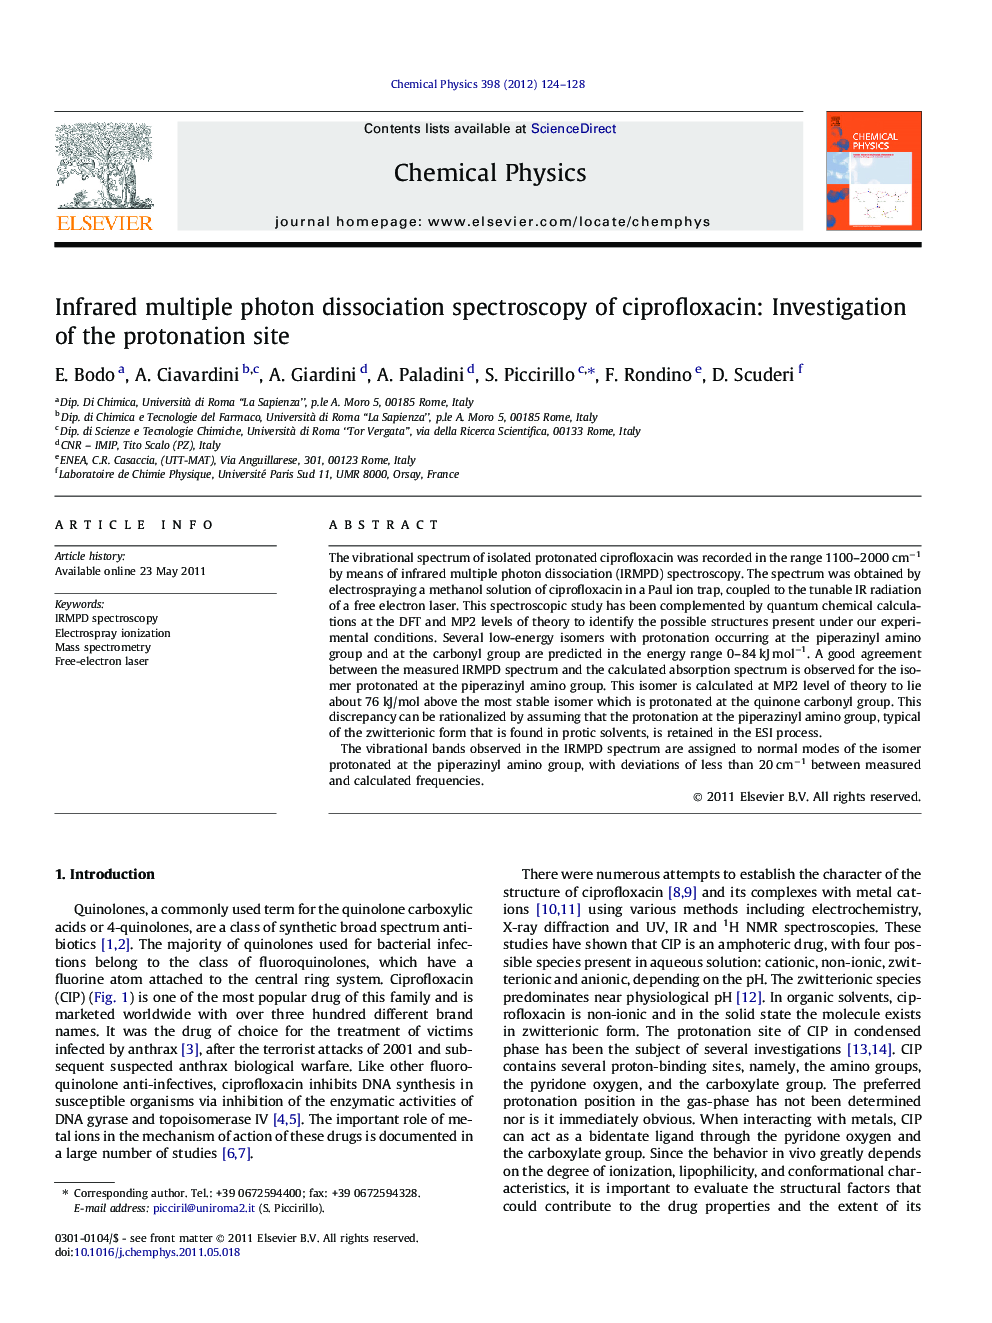 Infrared multiple photon dissociation spectroscopy of ciprofloxacin: Investigation of the protonation site